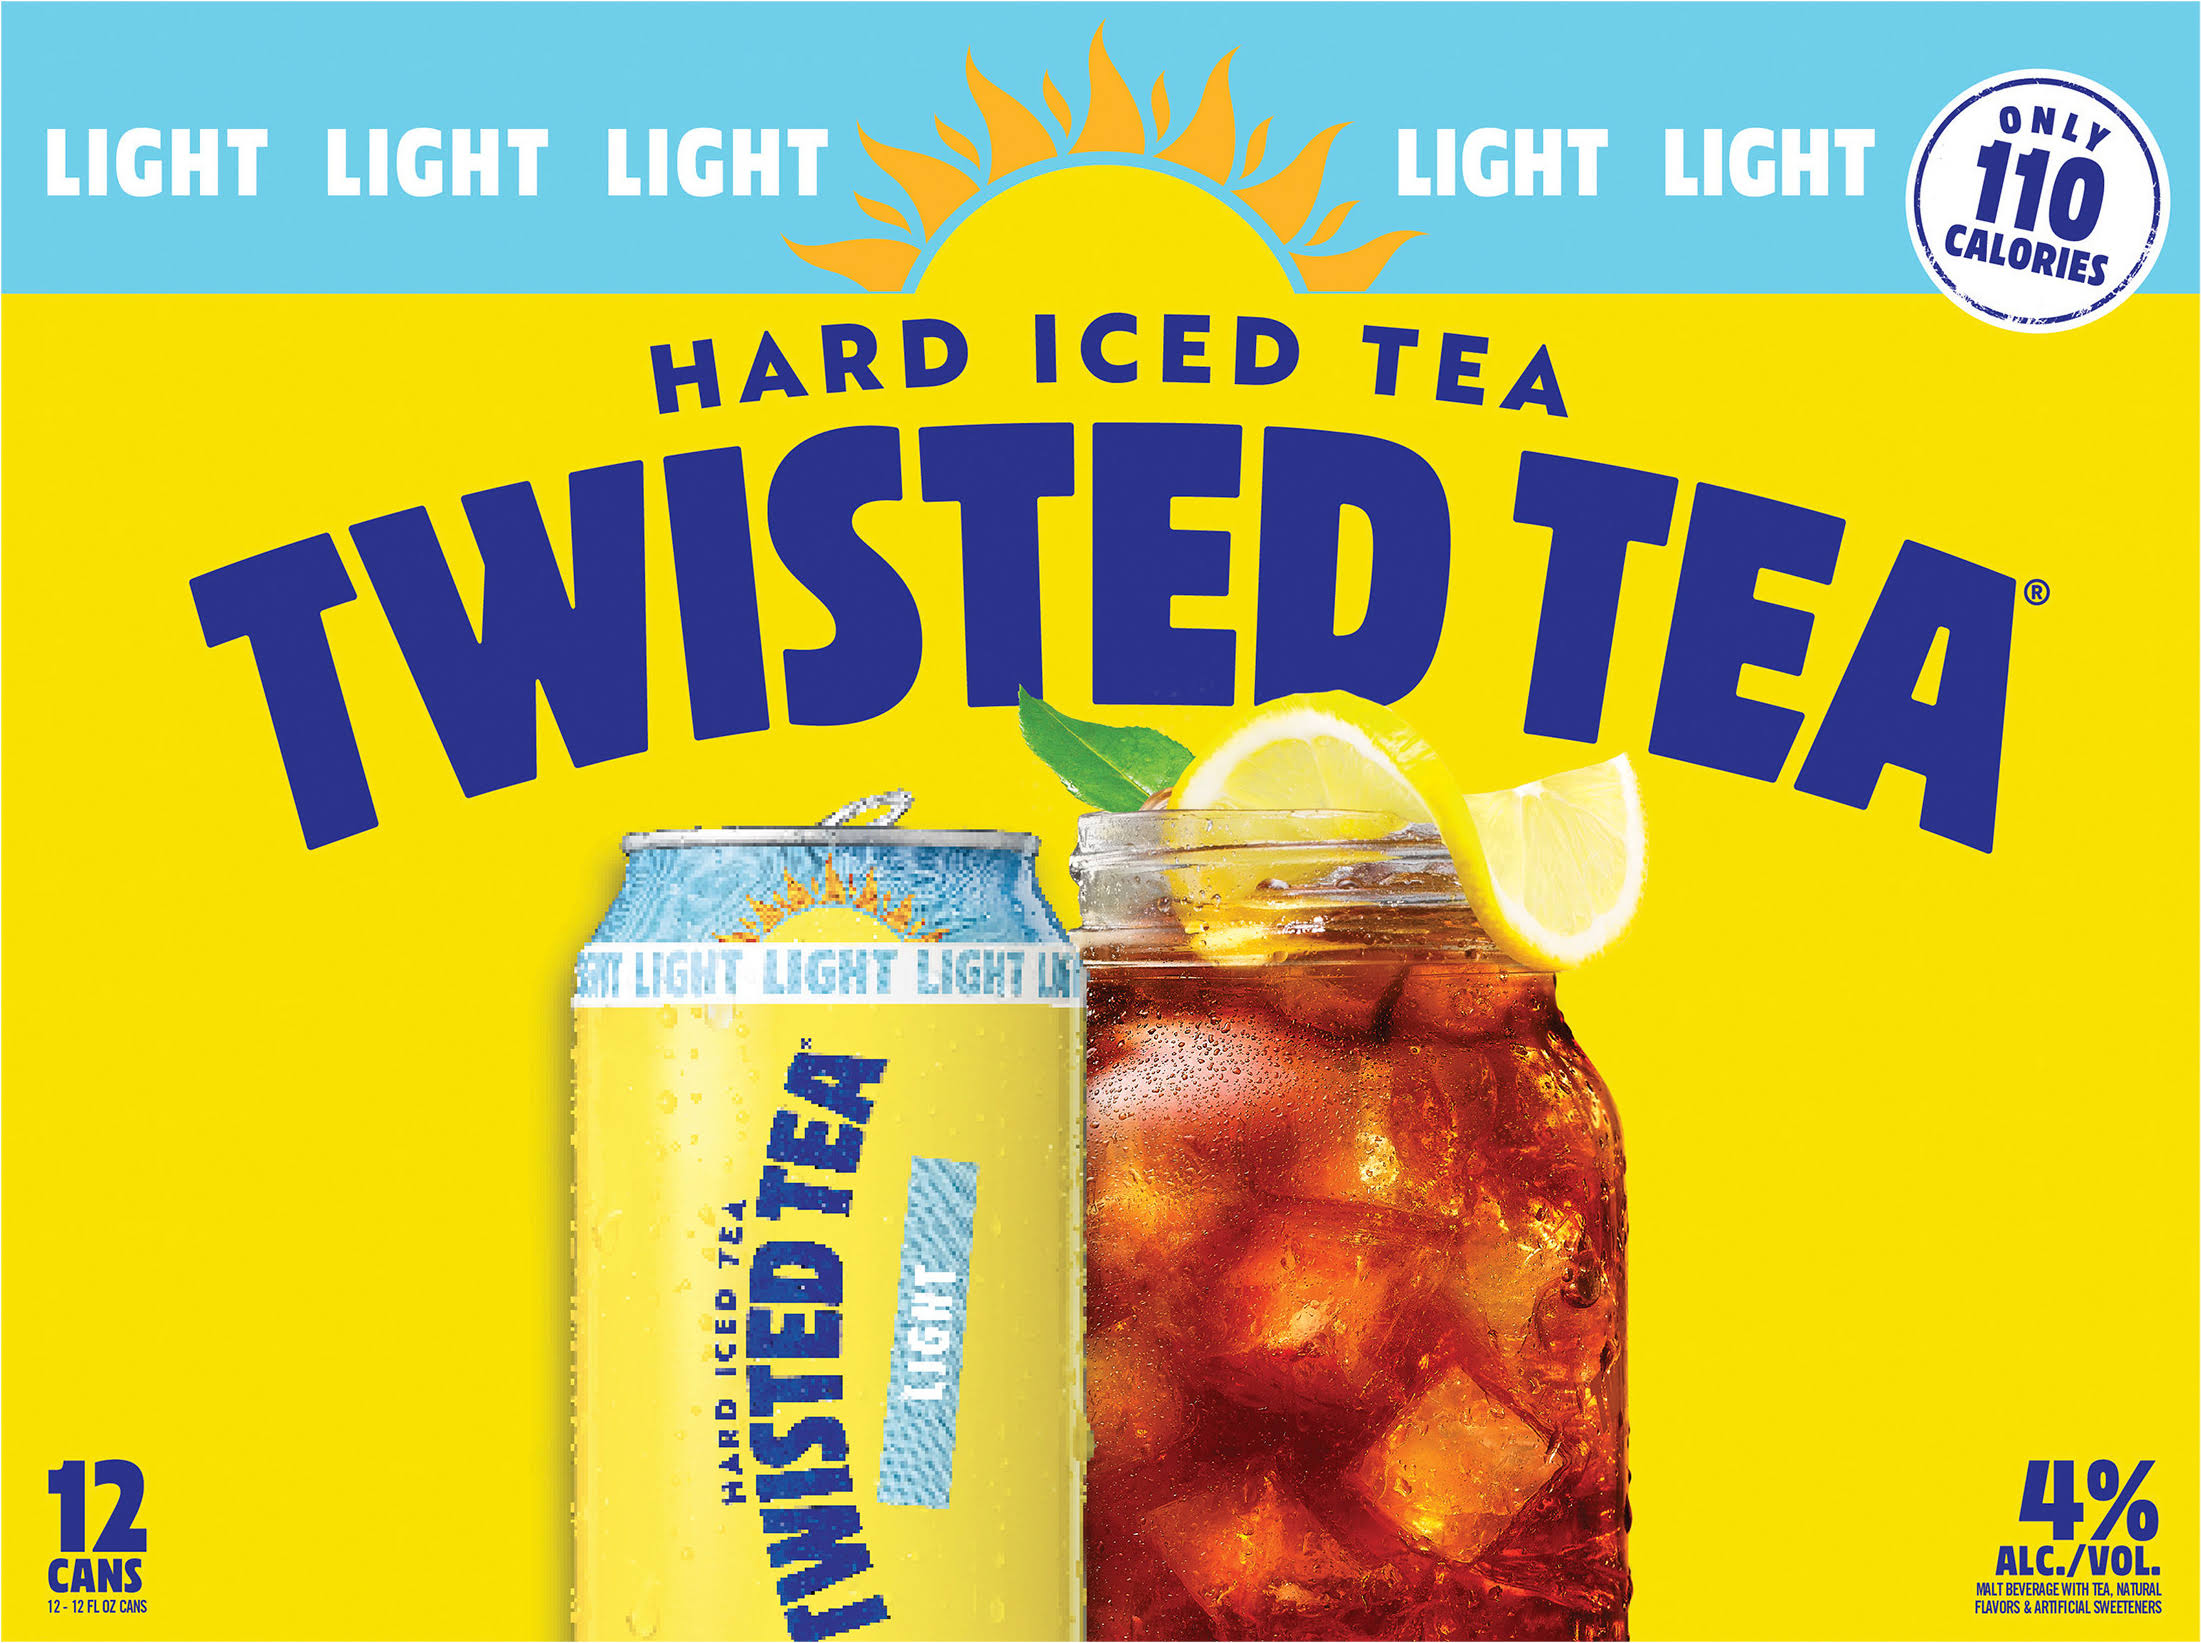 Twisted Tea Hard Iced Tea, Light - 12 pack, 12 fl oz cans